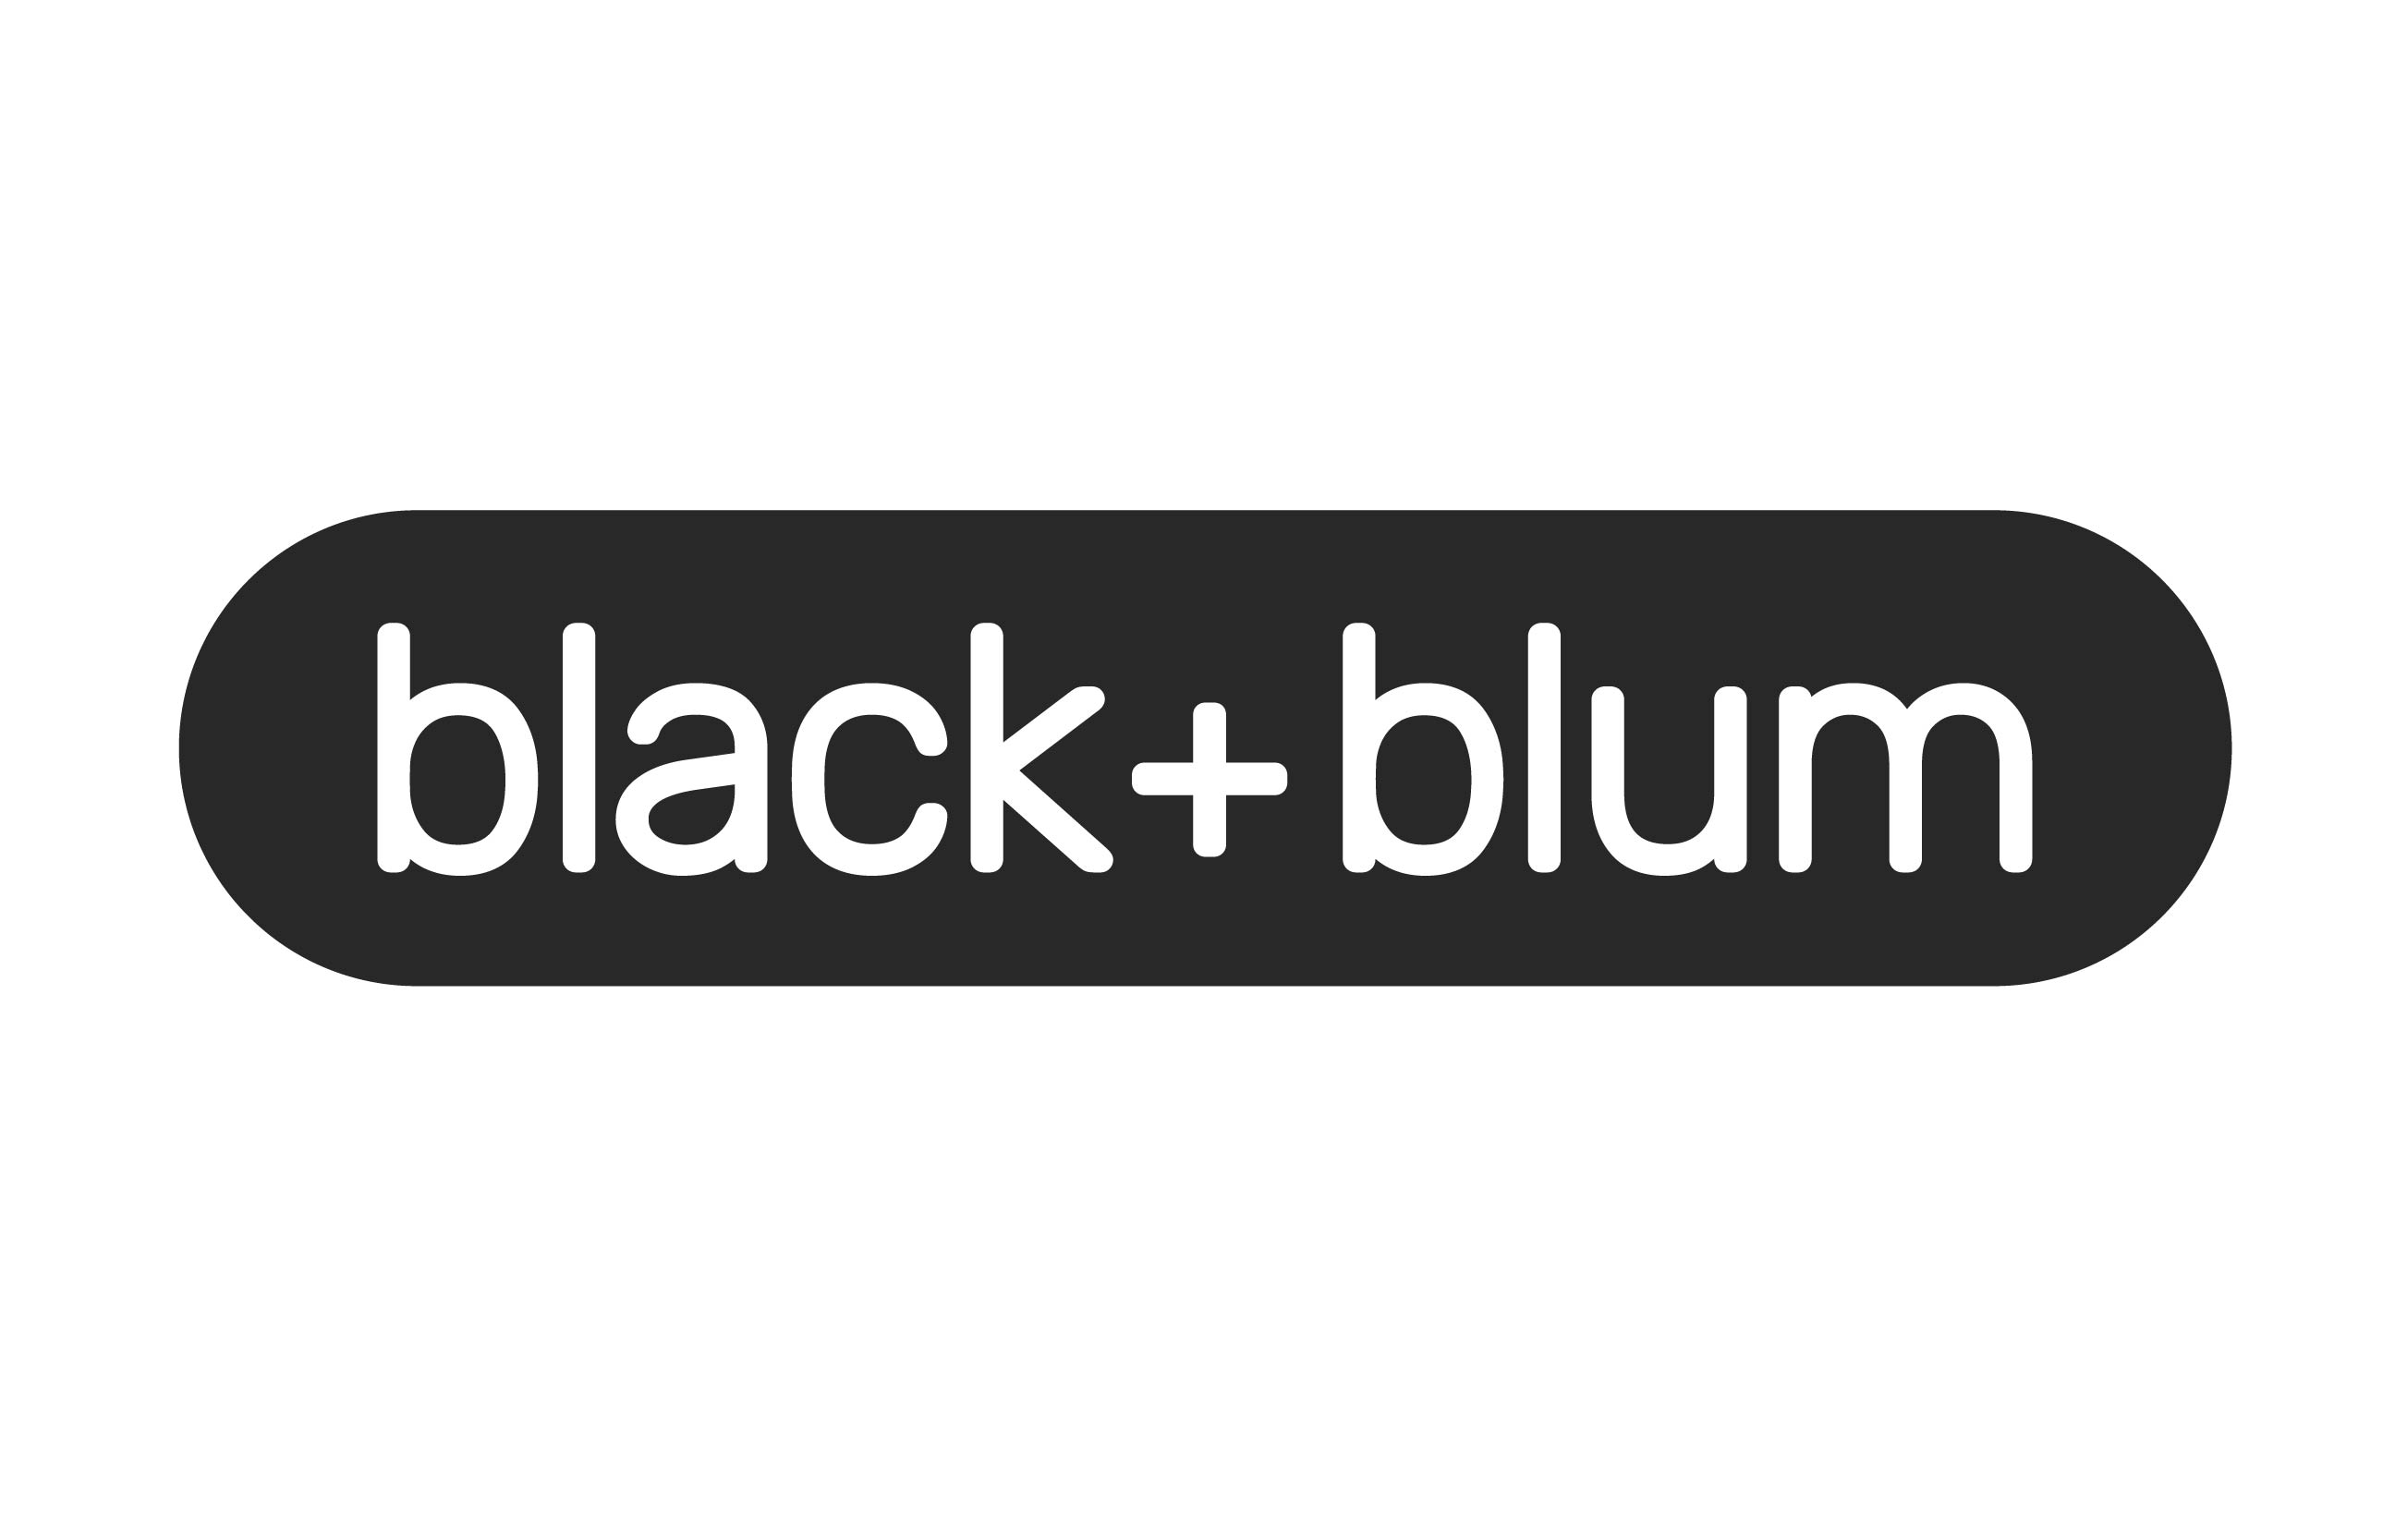 BLACK + BLUM - BLACK+BLUM